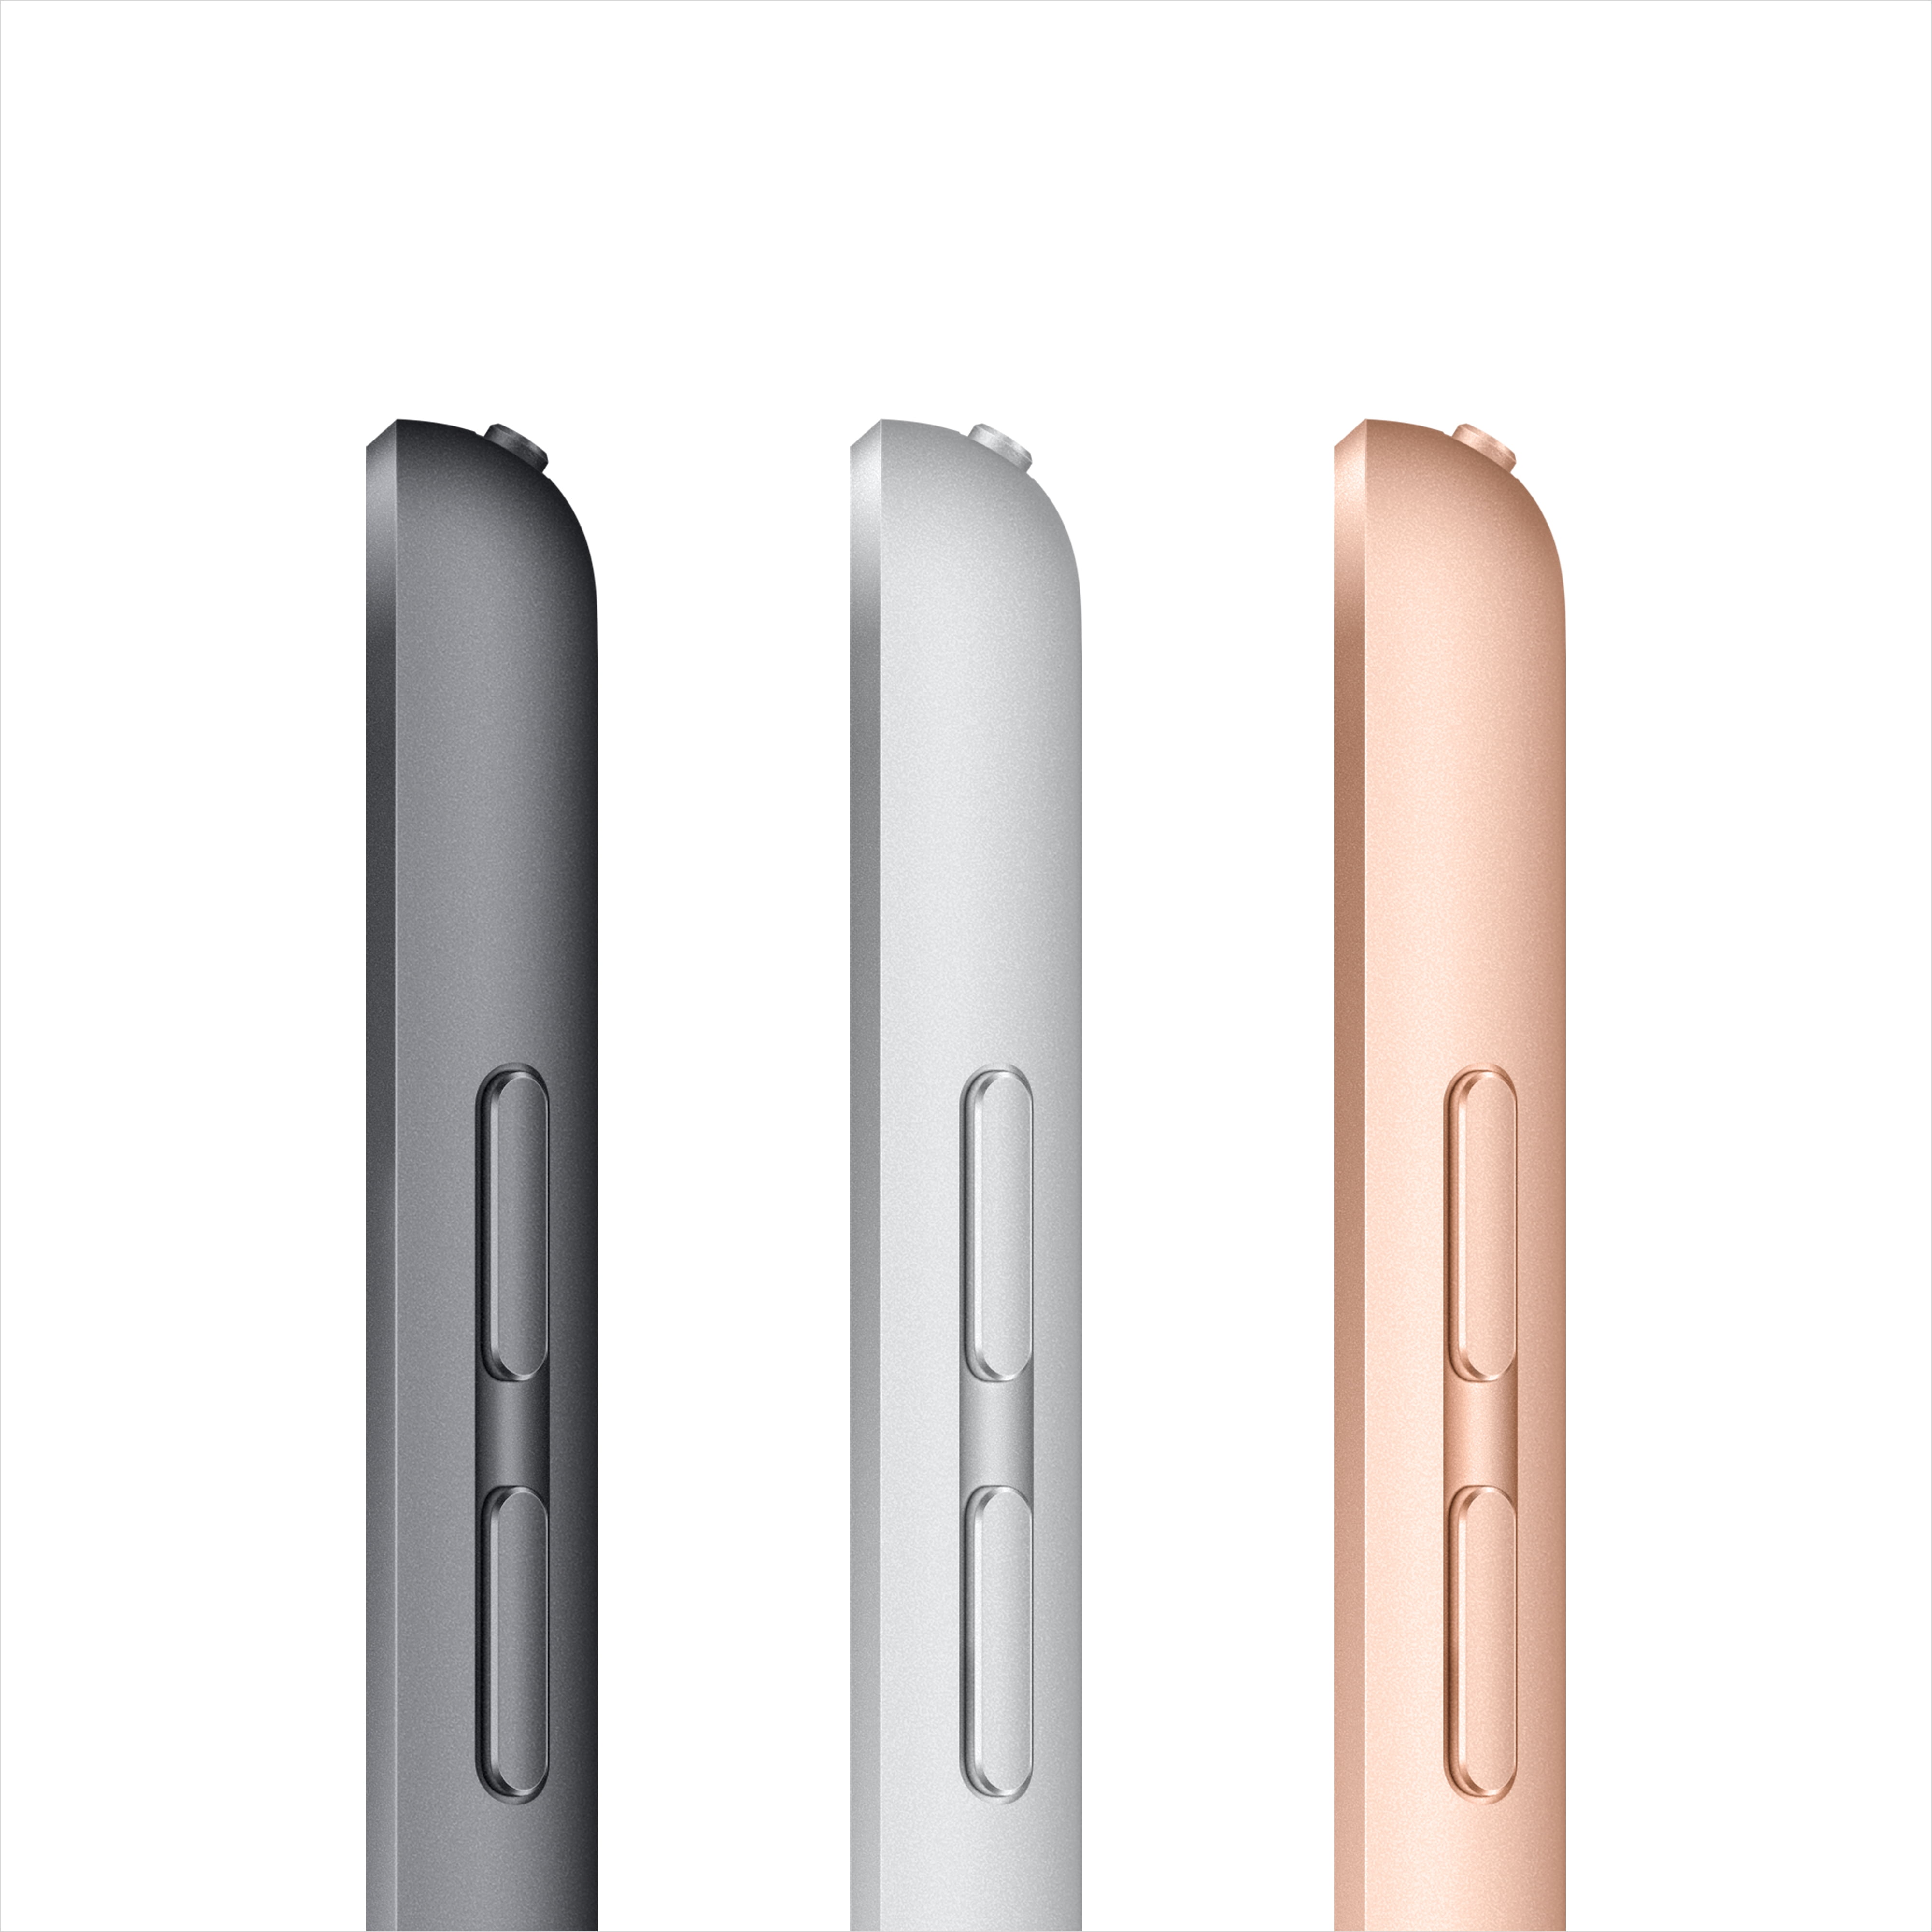 Apple 10.2-inch iPad Wi-Fi 32GB - Space Gray (8th Generation)